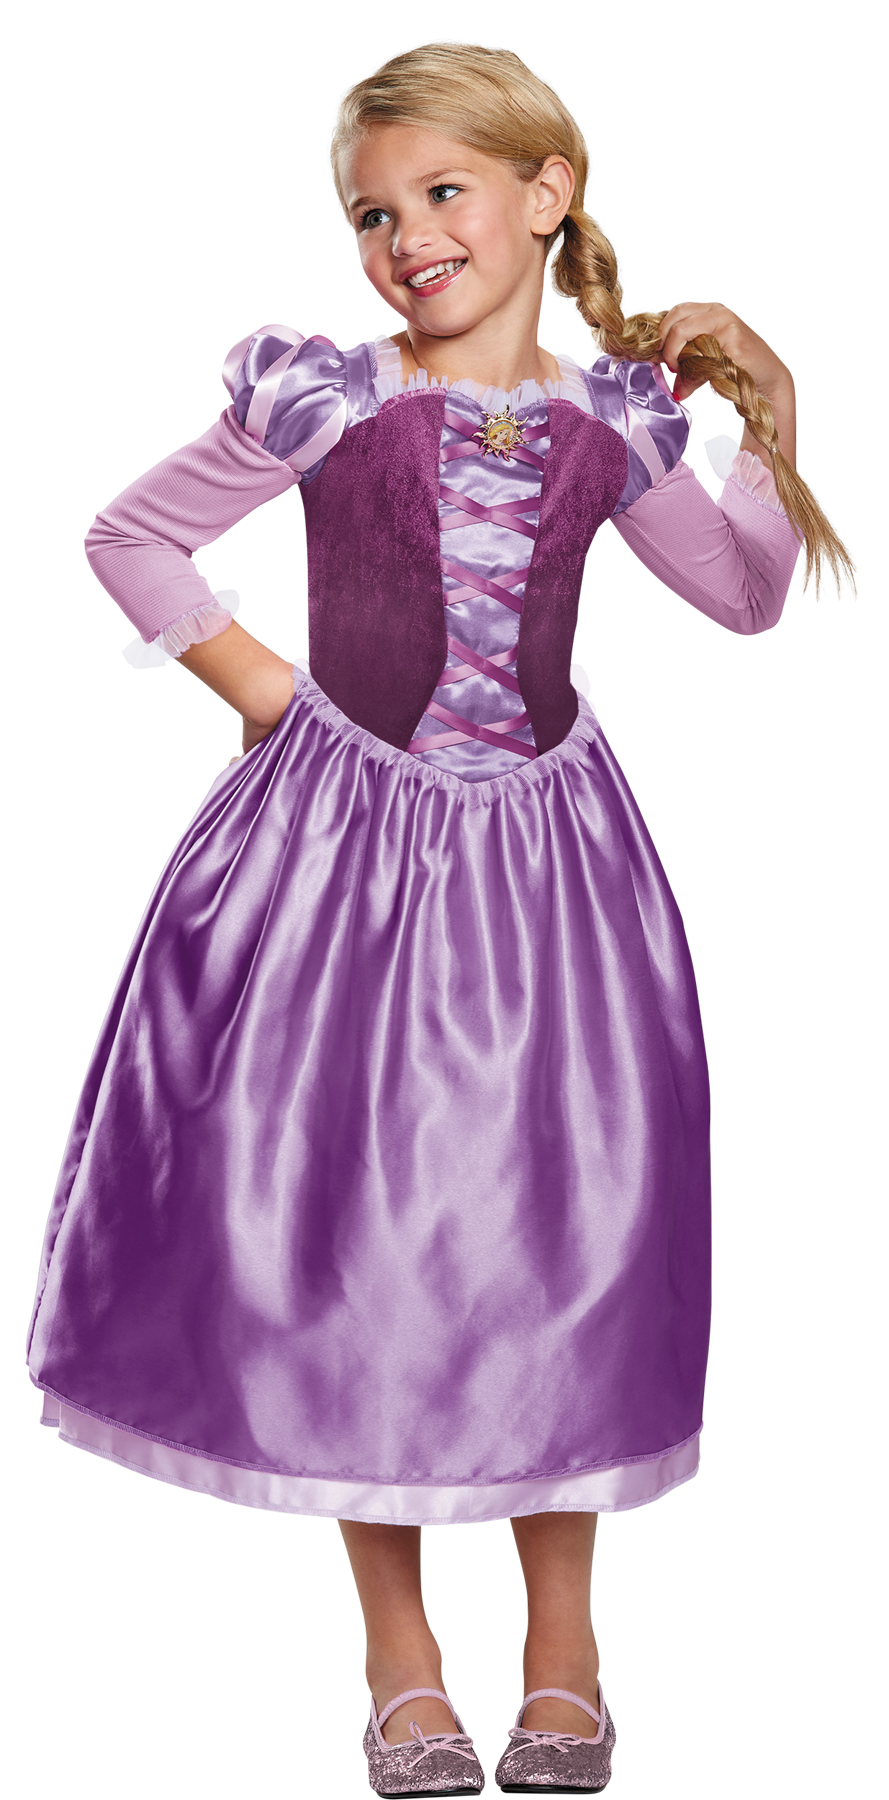 The Costume Center Purple Rapunzel Day Dress Class Girl Toddlers Halloween Costume - Medium